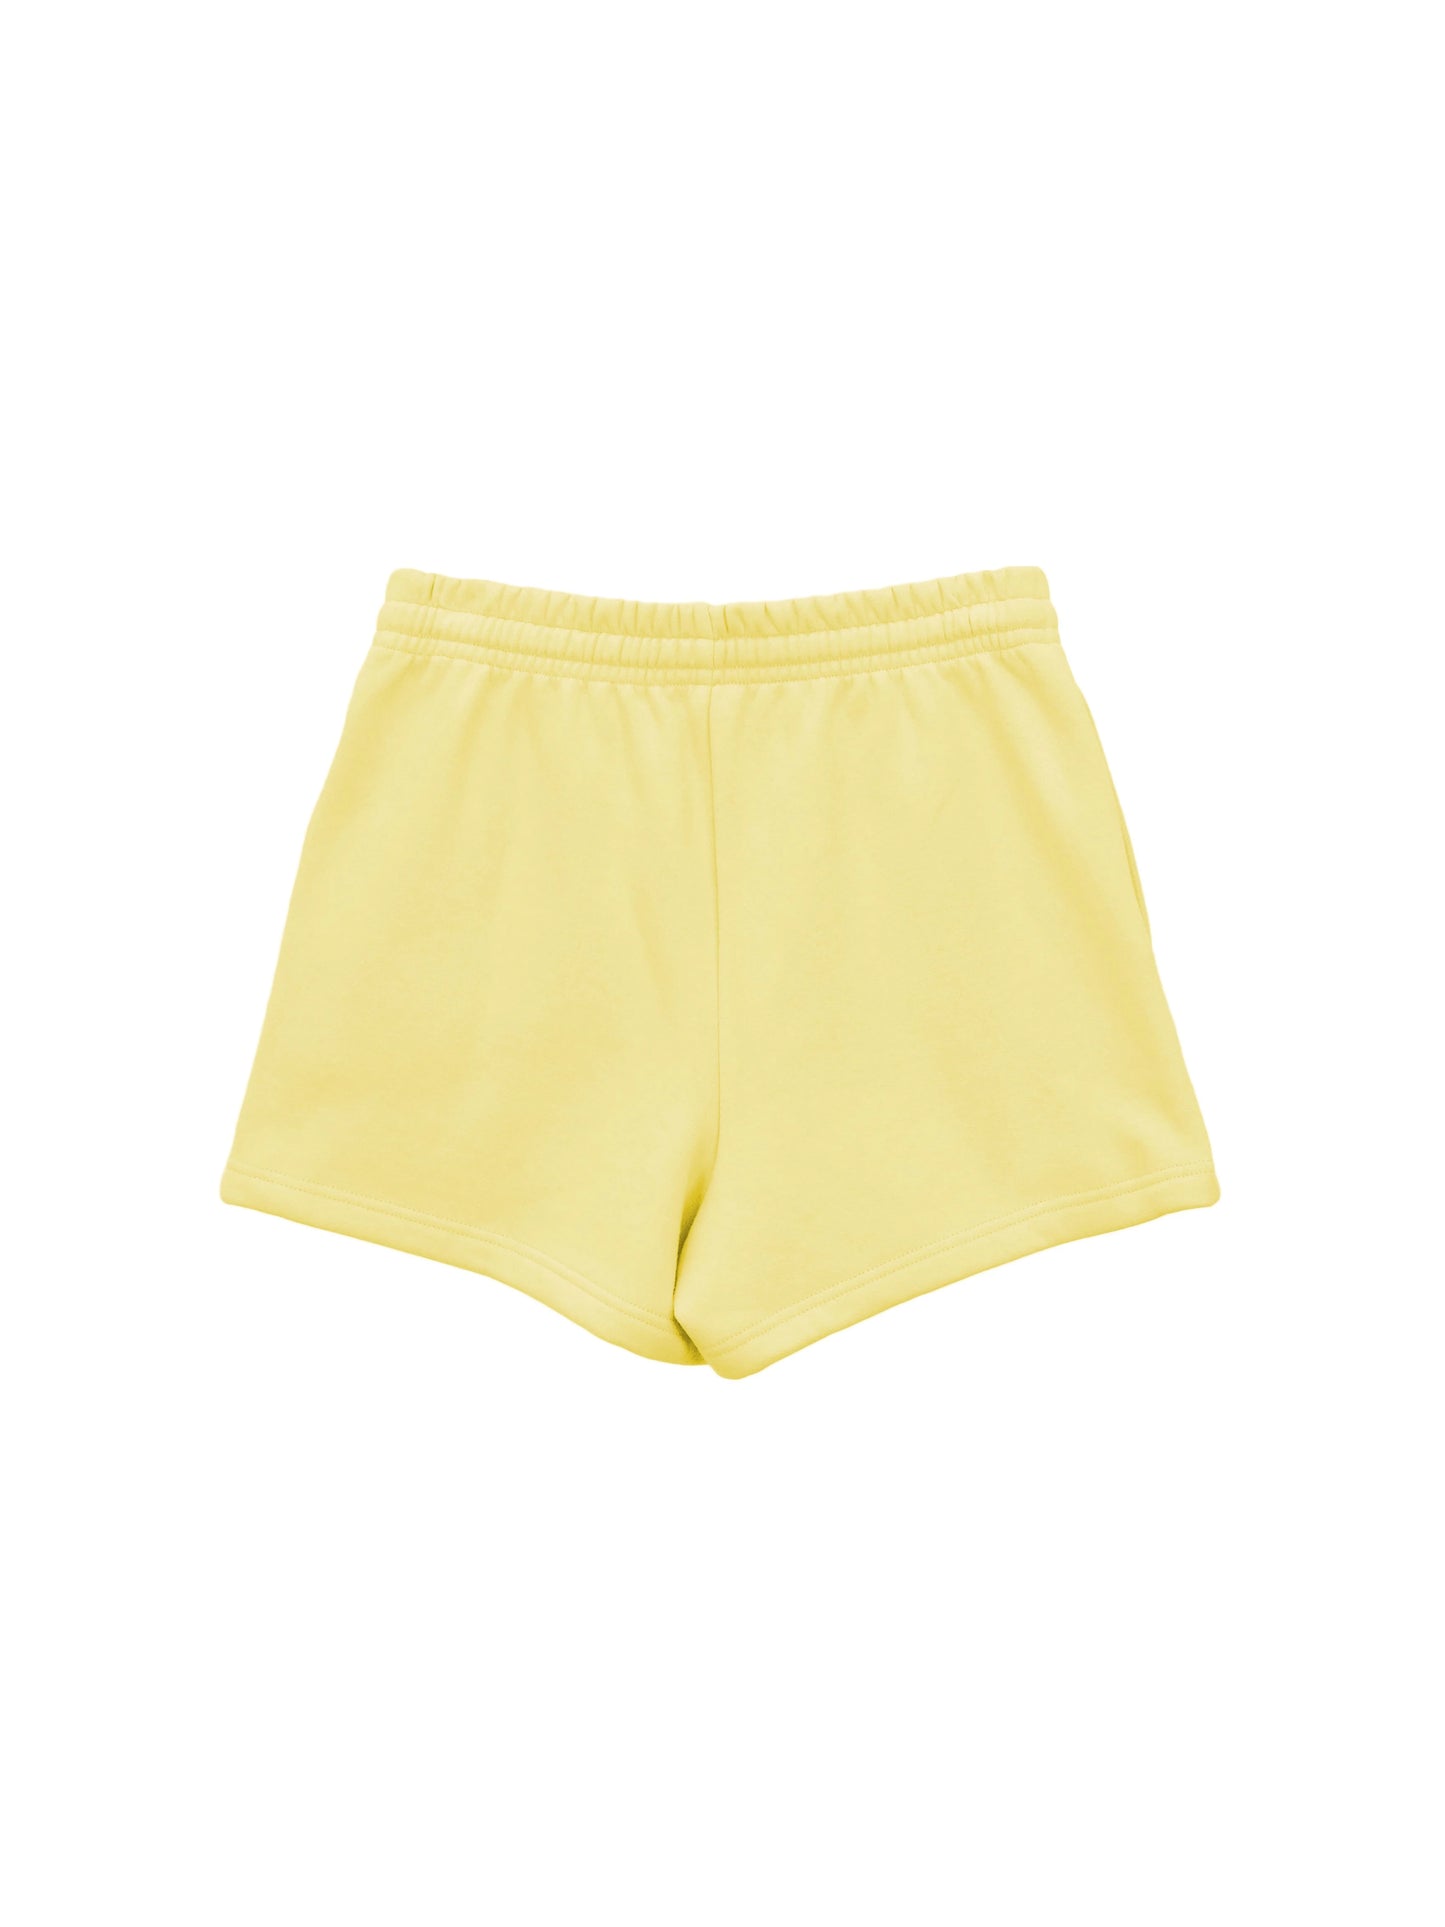 Back of yellow mini shorts